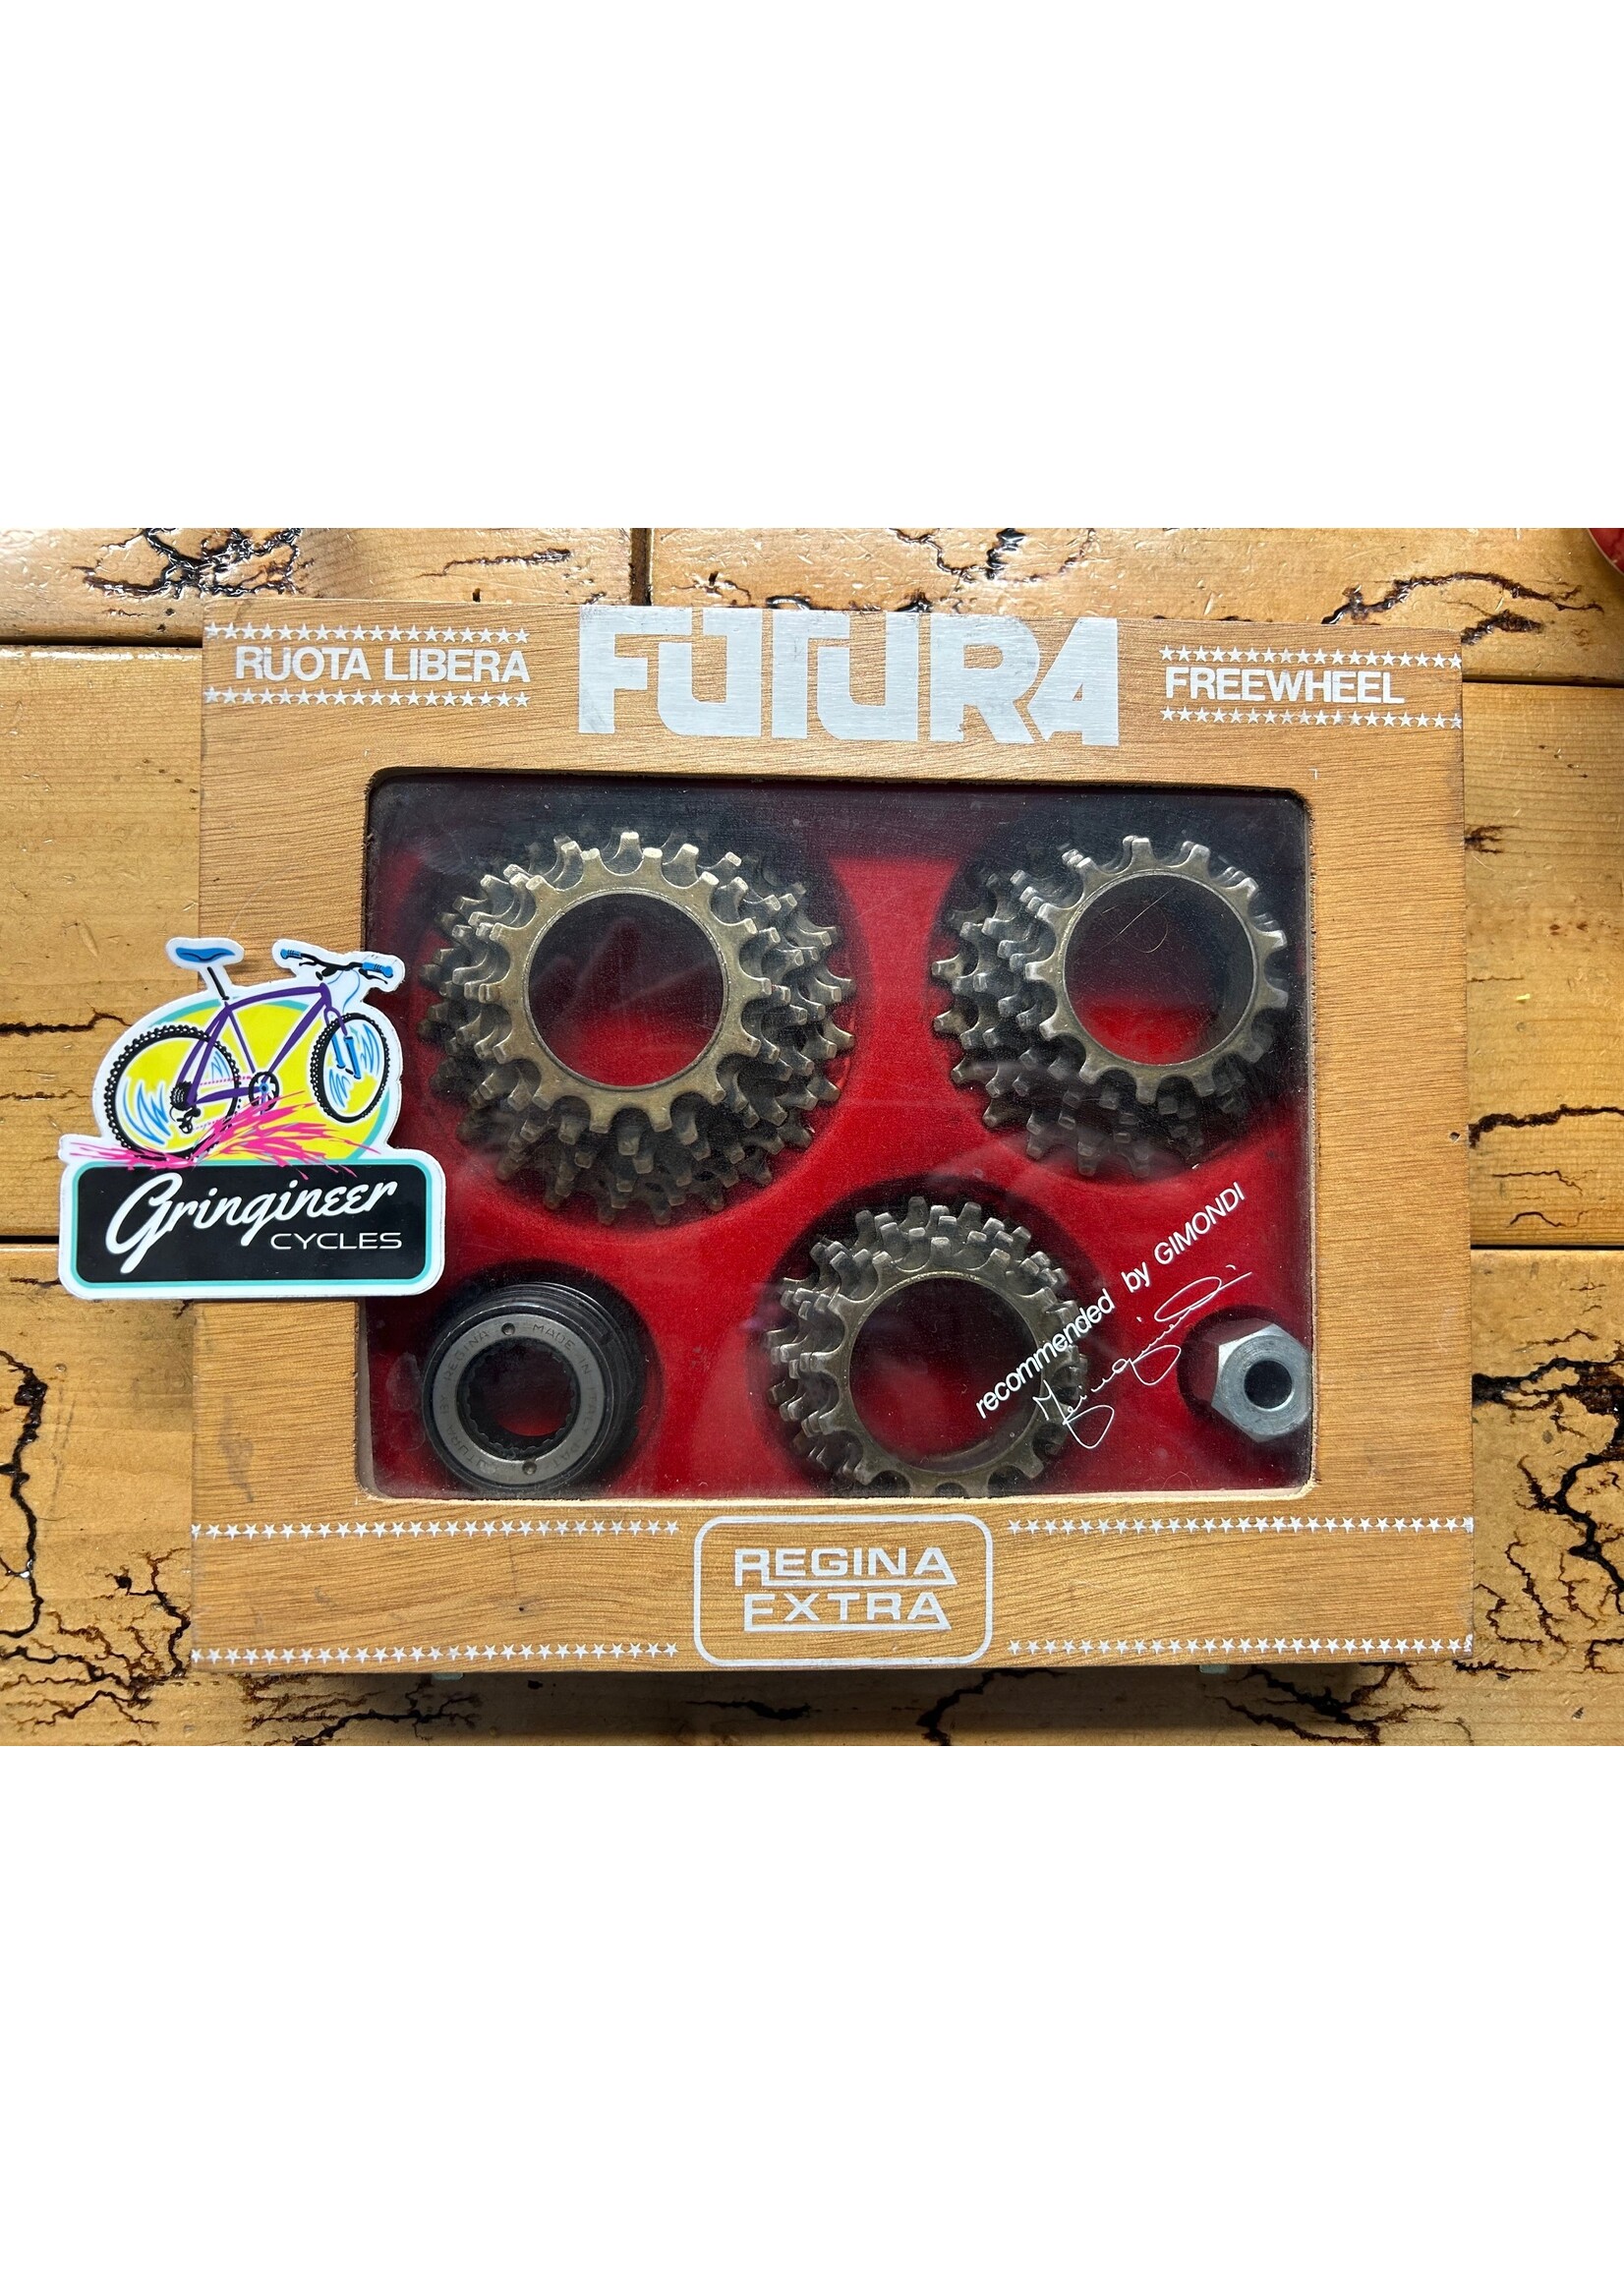 Regina Regina Extra Futura  6 Speed Freewheel Set In Box